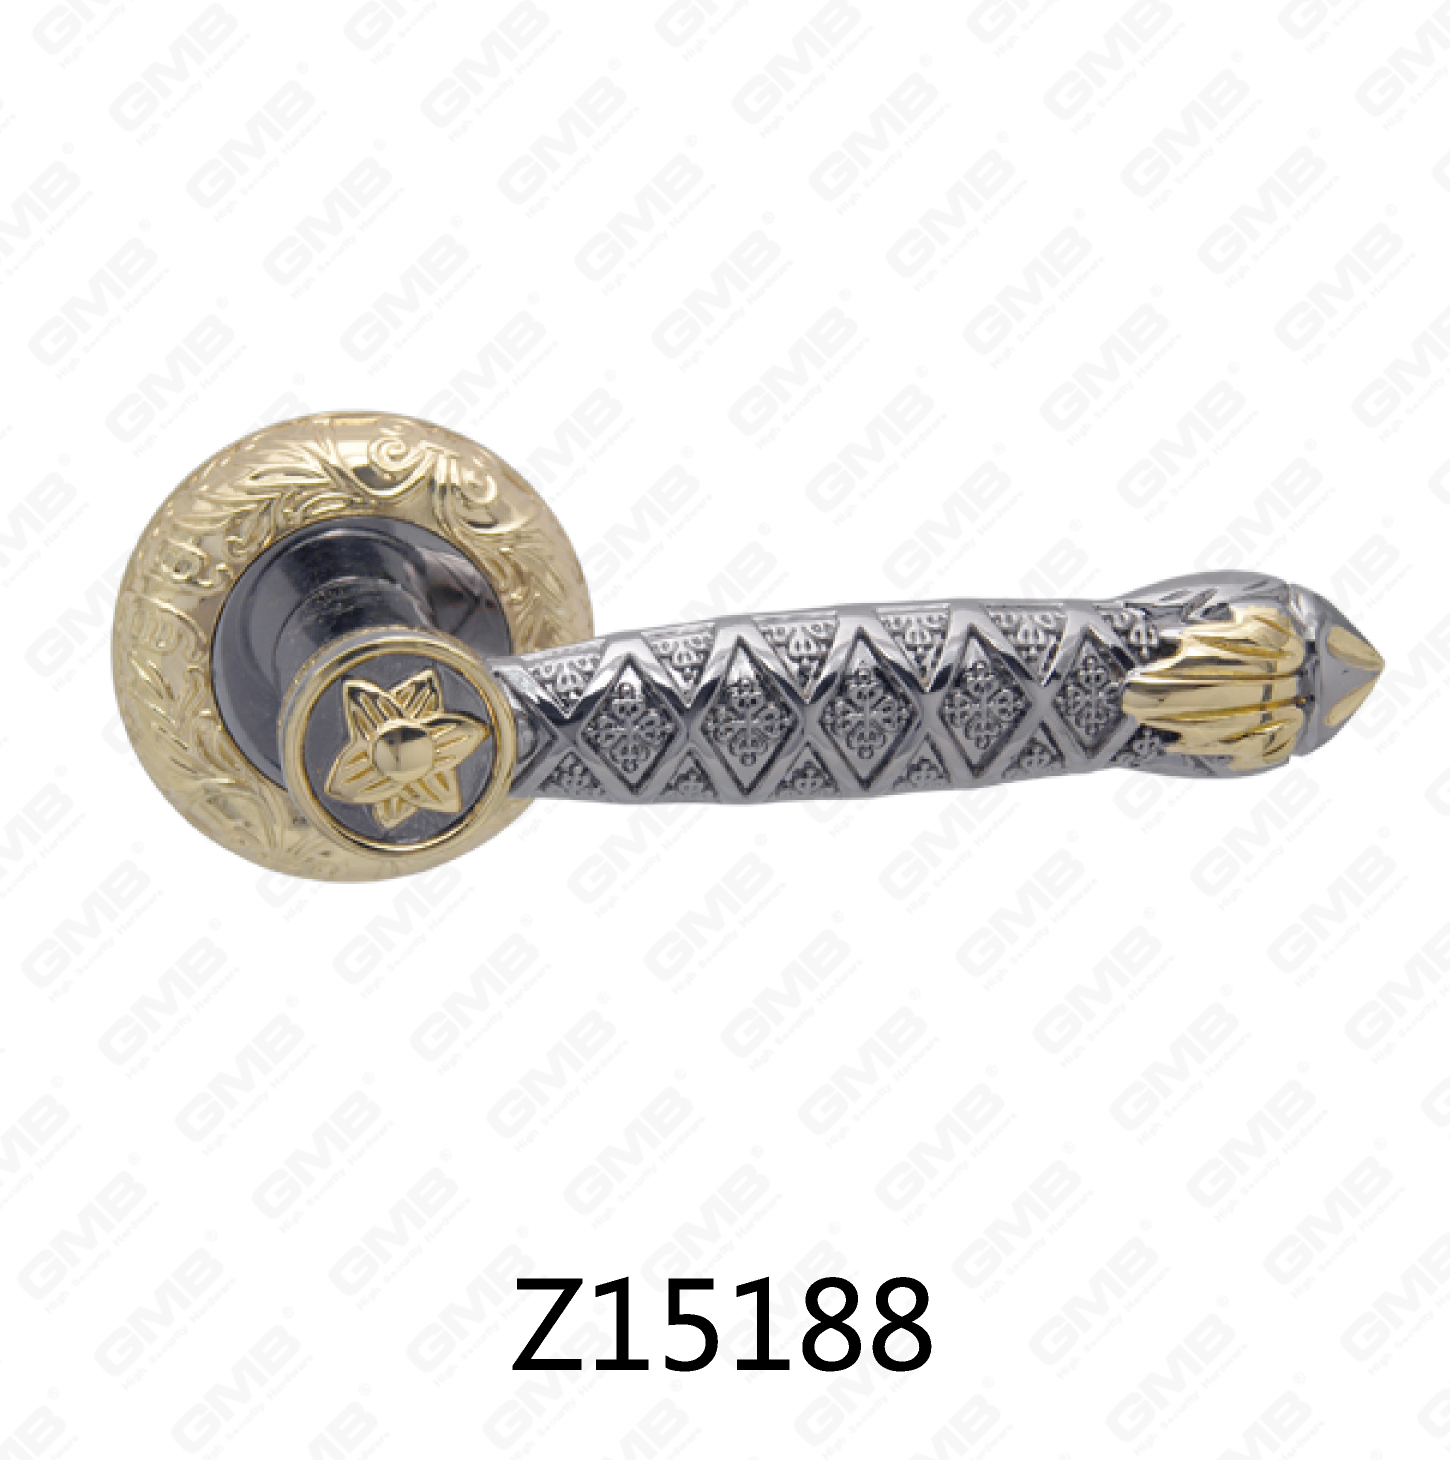 Manija de puerta de roseta de aluminio de aleación de zinc Zamak con roseta redonda (Z15188)